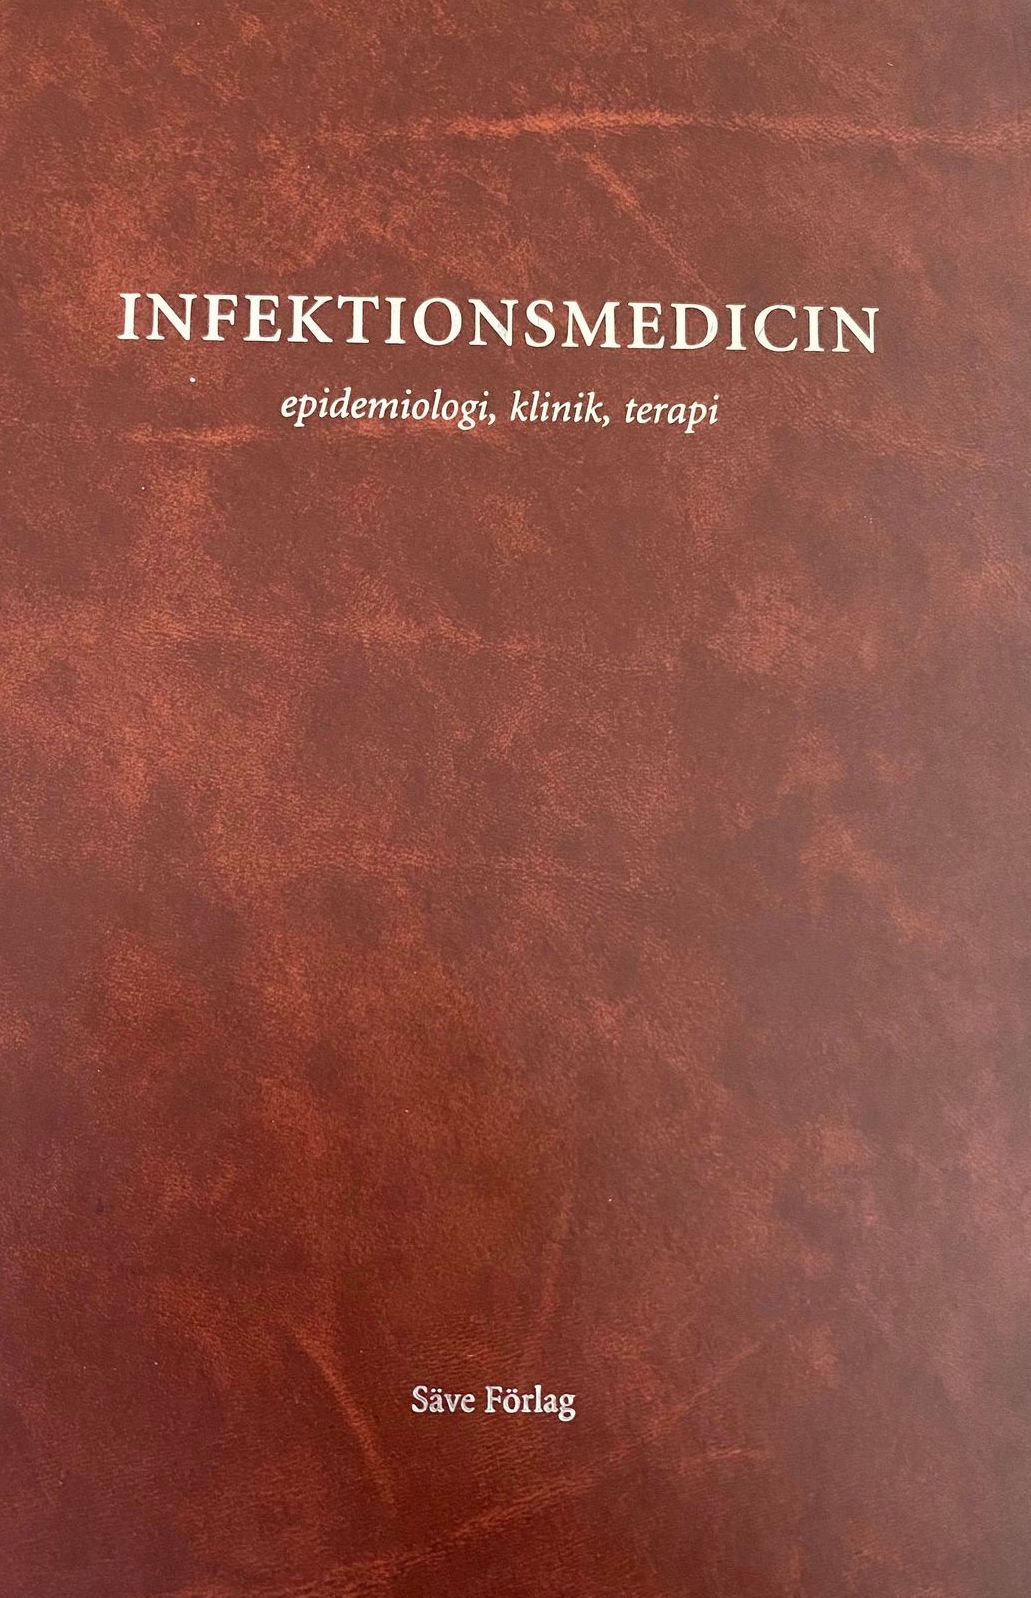 Infektionsmedicin: epidemiologi, klinik, terapi; Sten Iwarson; 2011